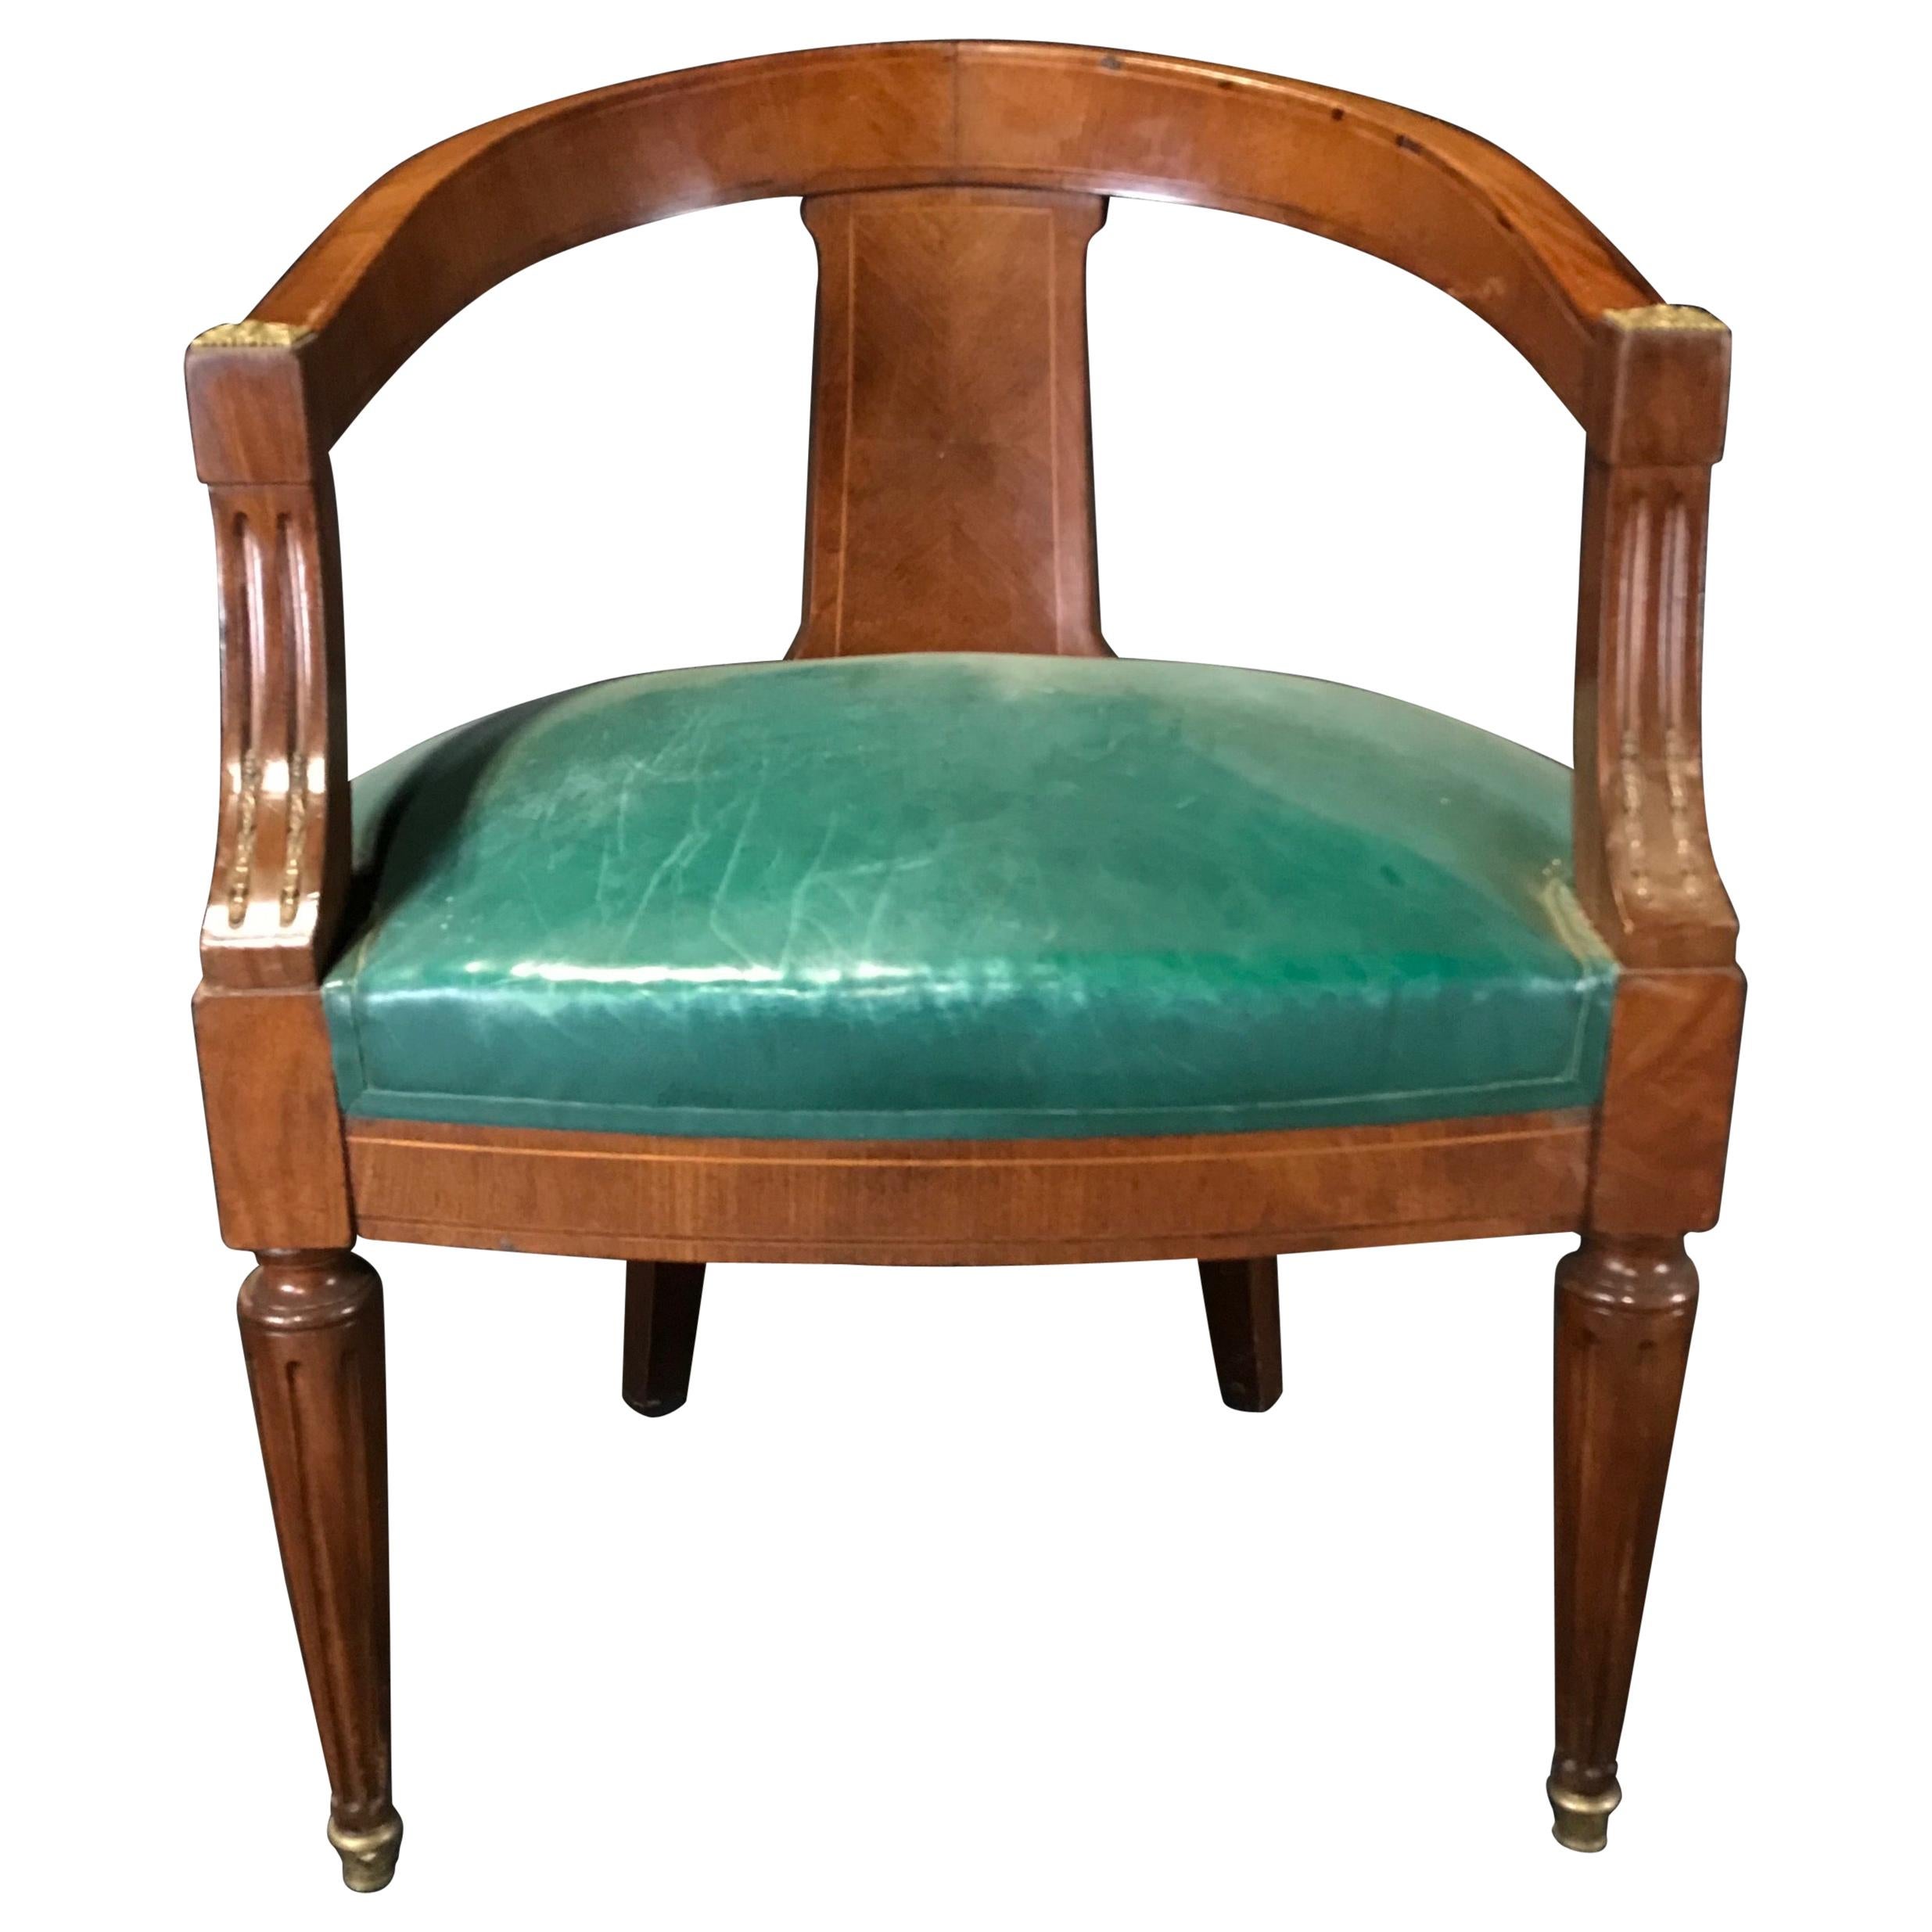 Refined French Walnut Louis XVI Leather Desk or Boudoir Chair